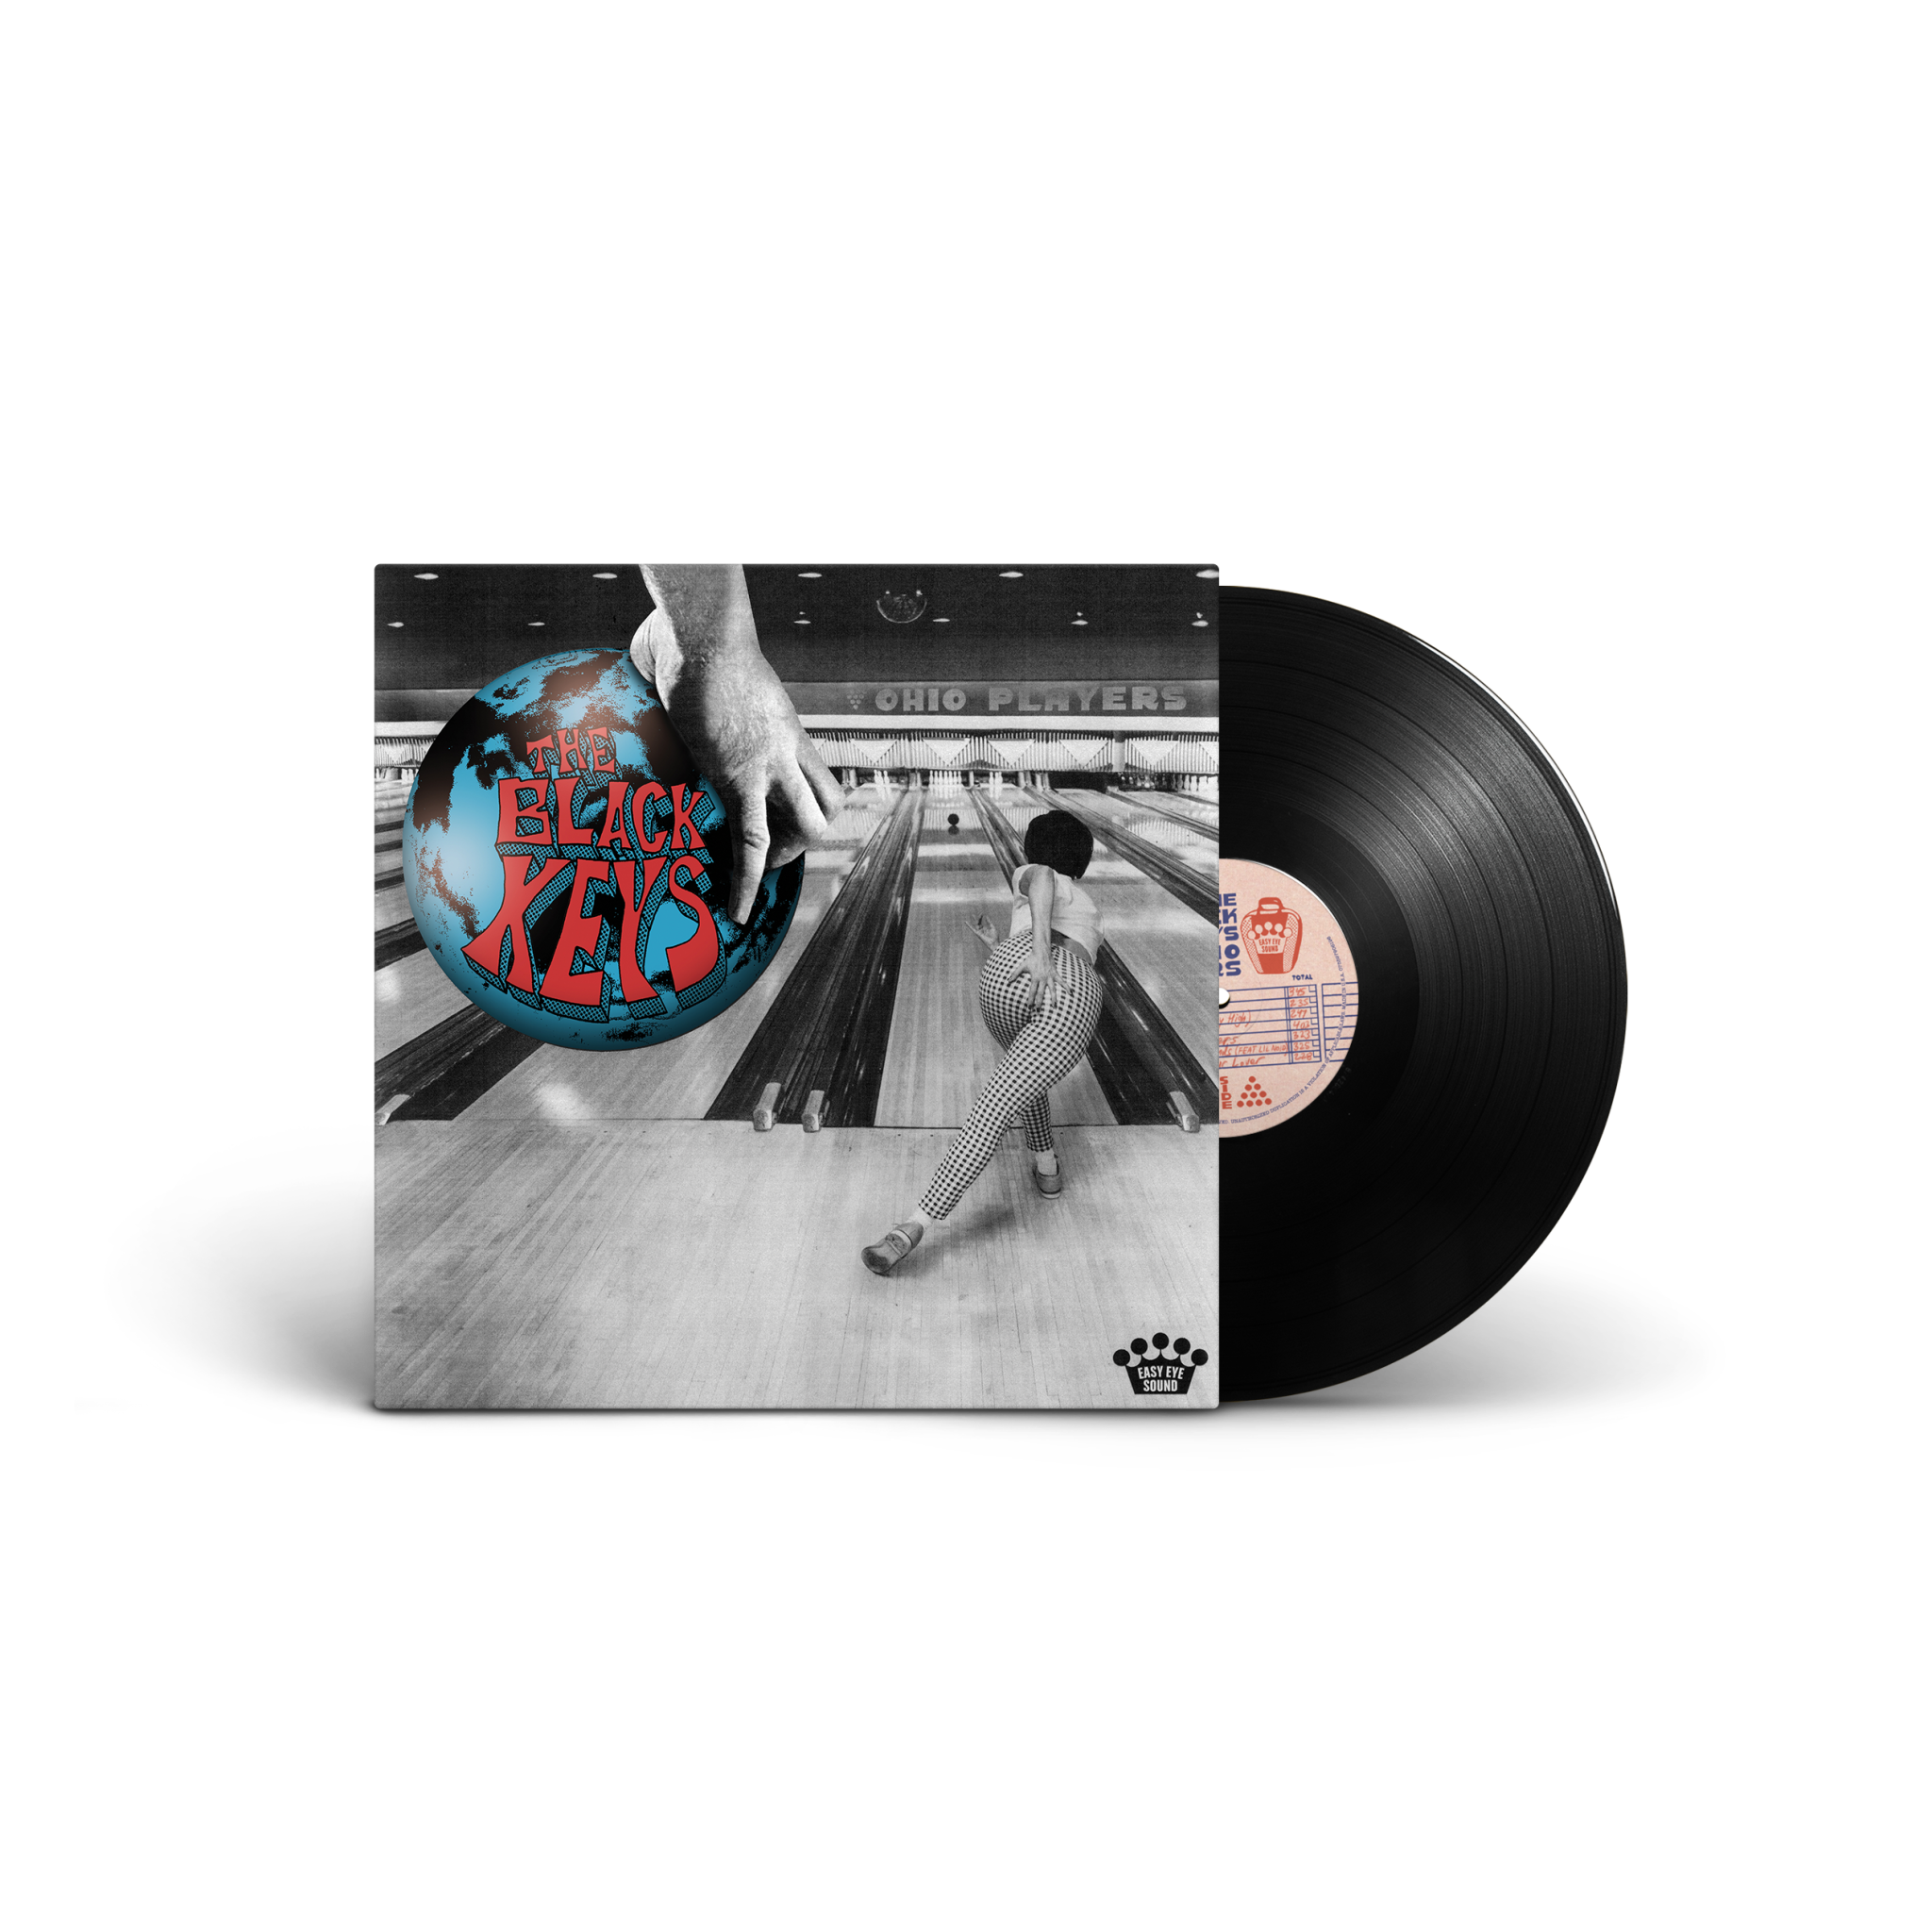 Order The Black Keys - Ohio Players (Black Vinyl)